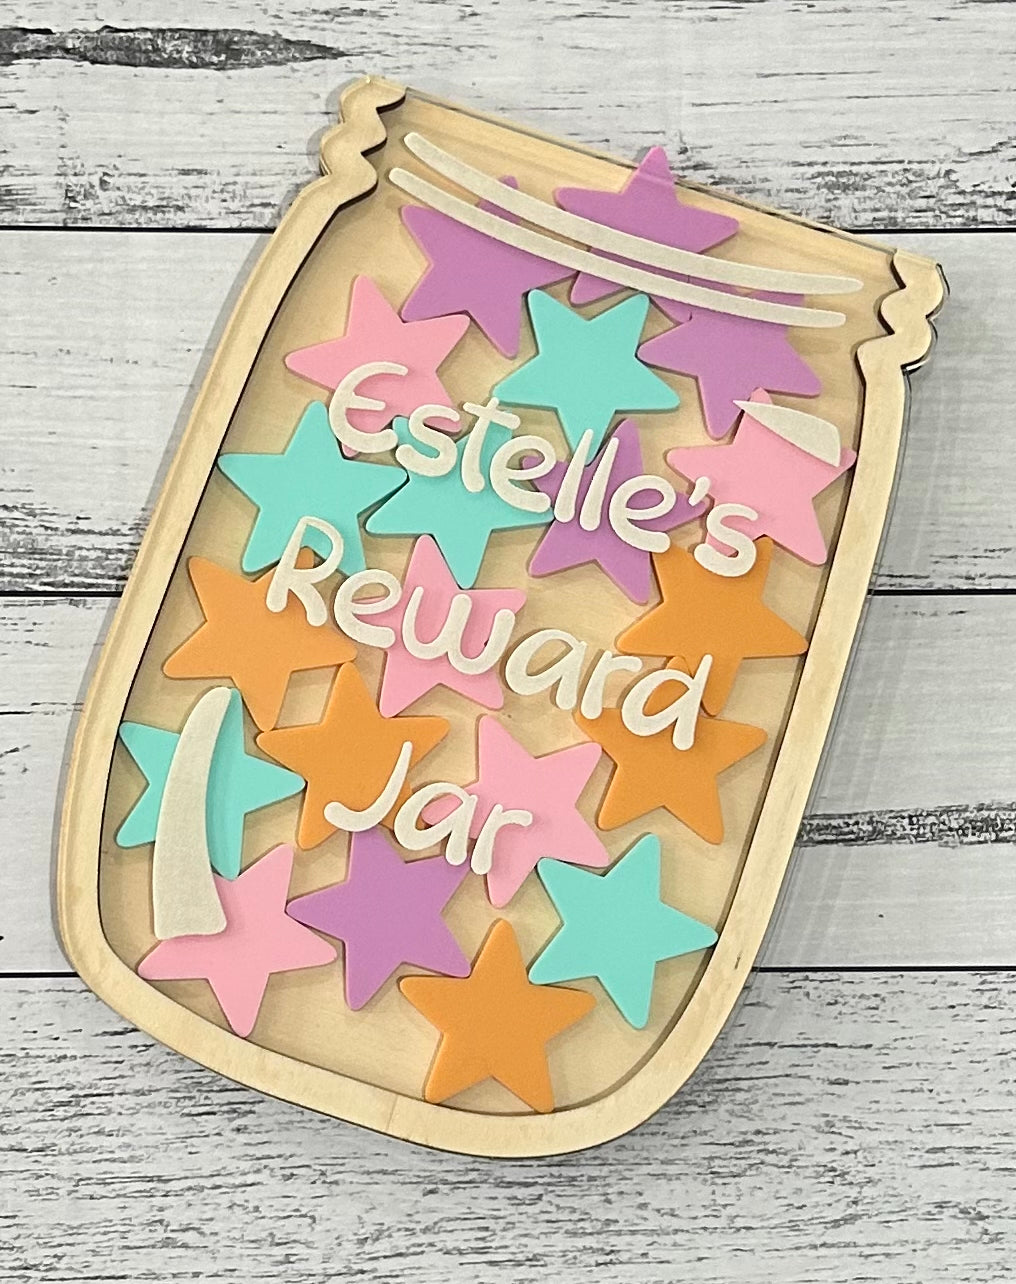 Reward Jars